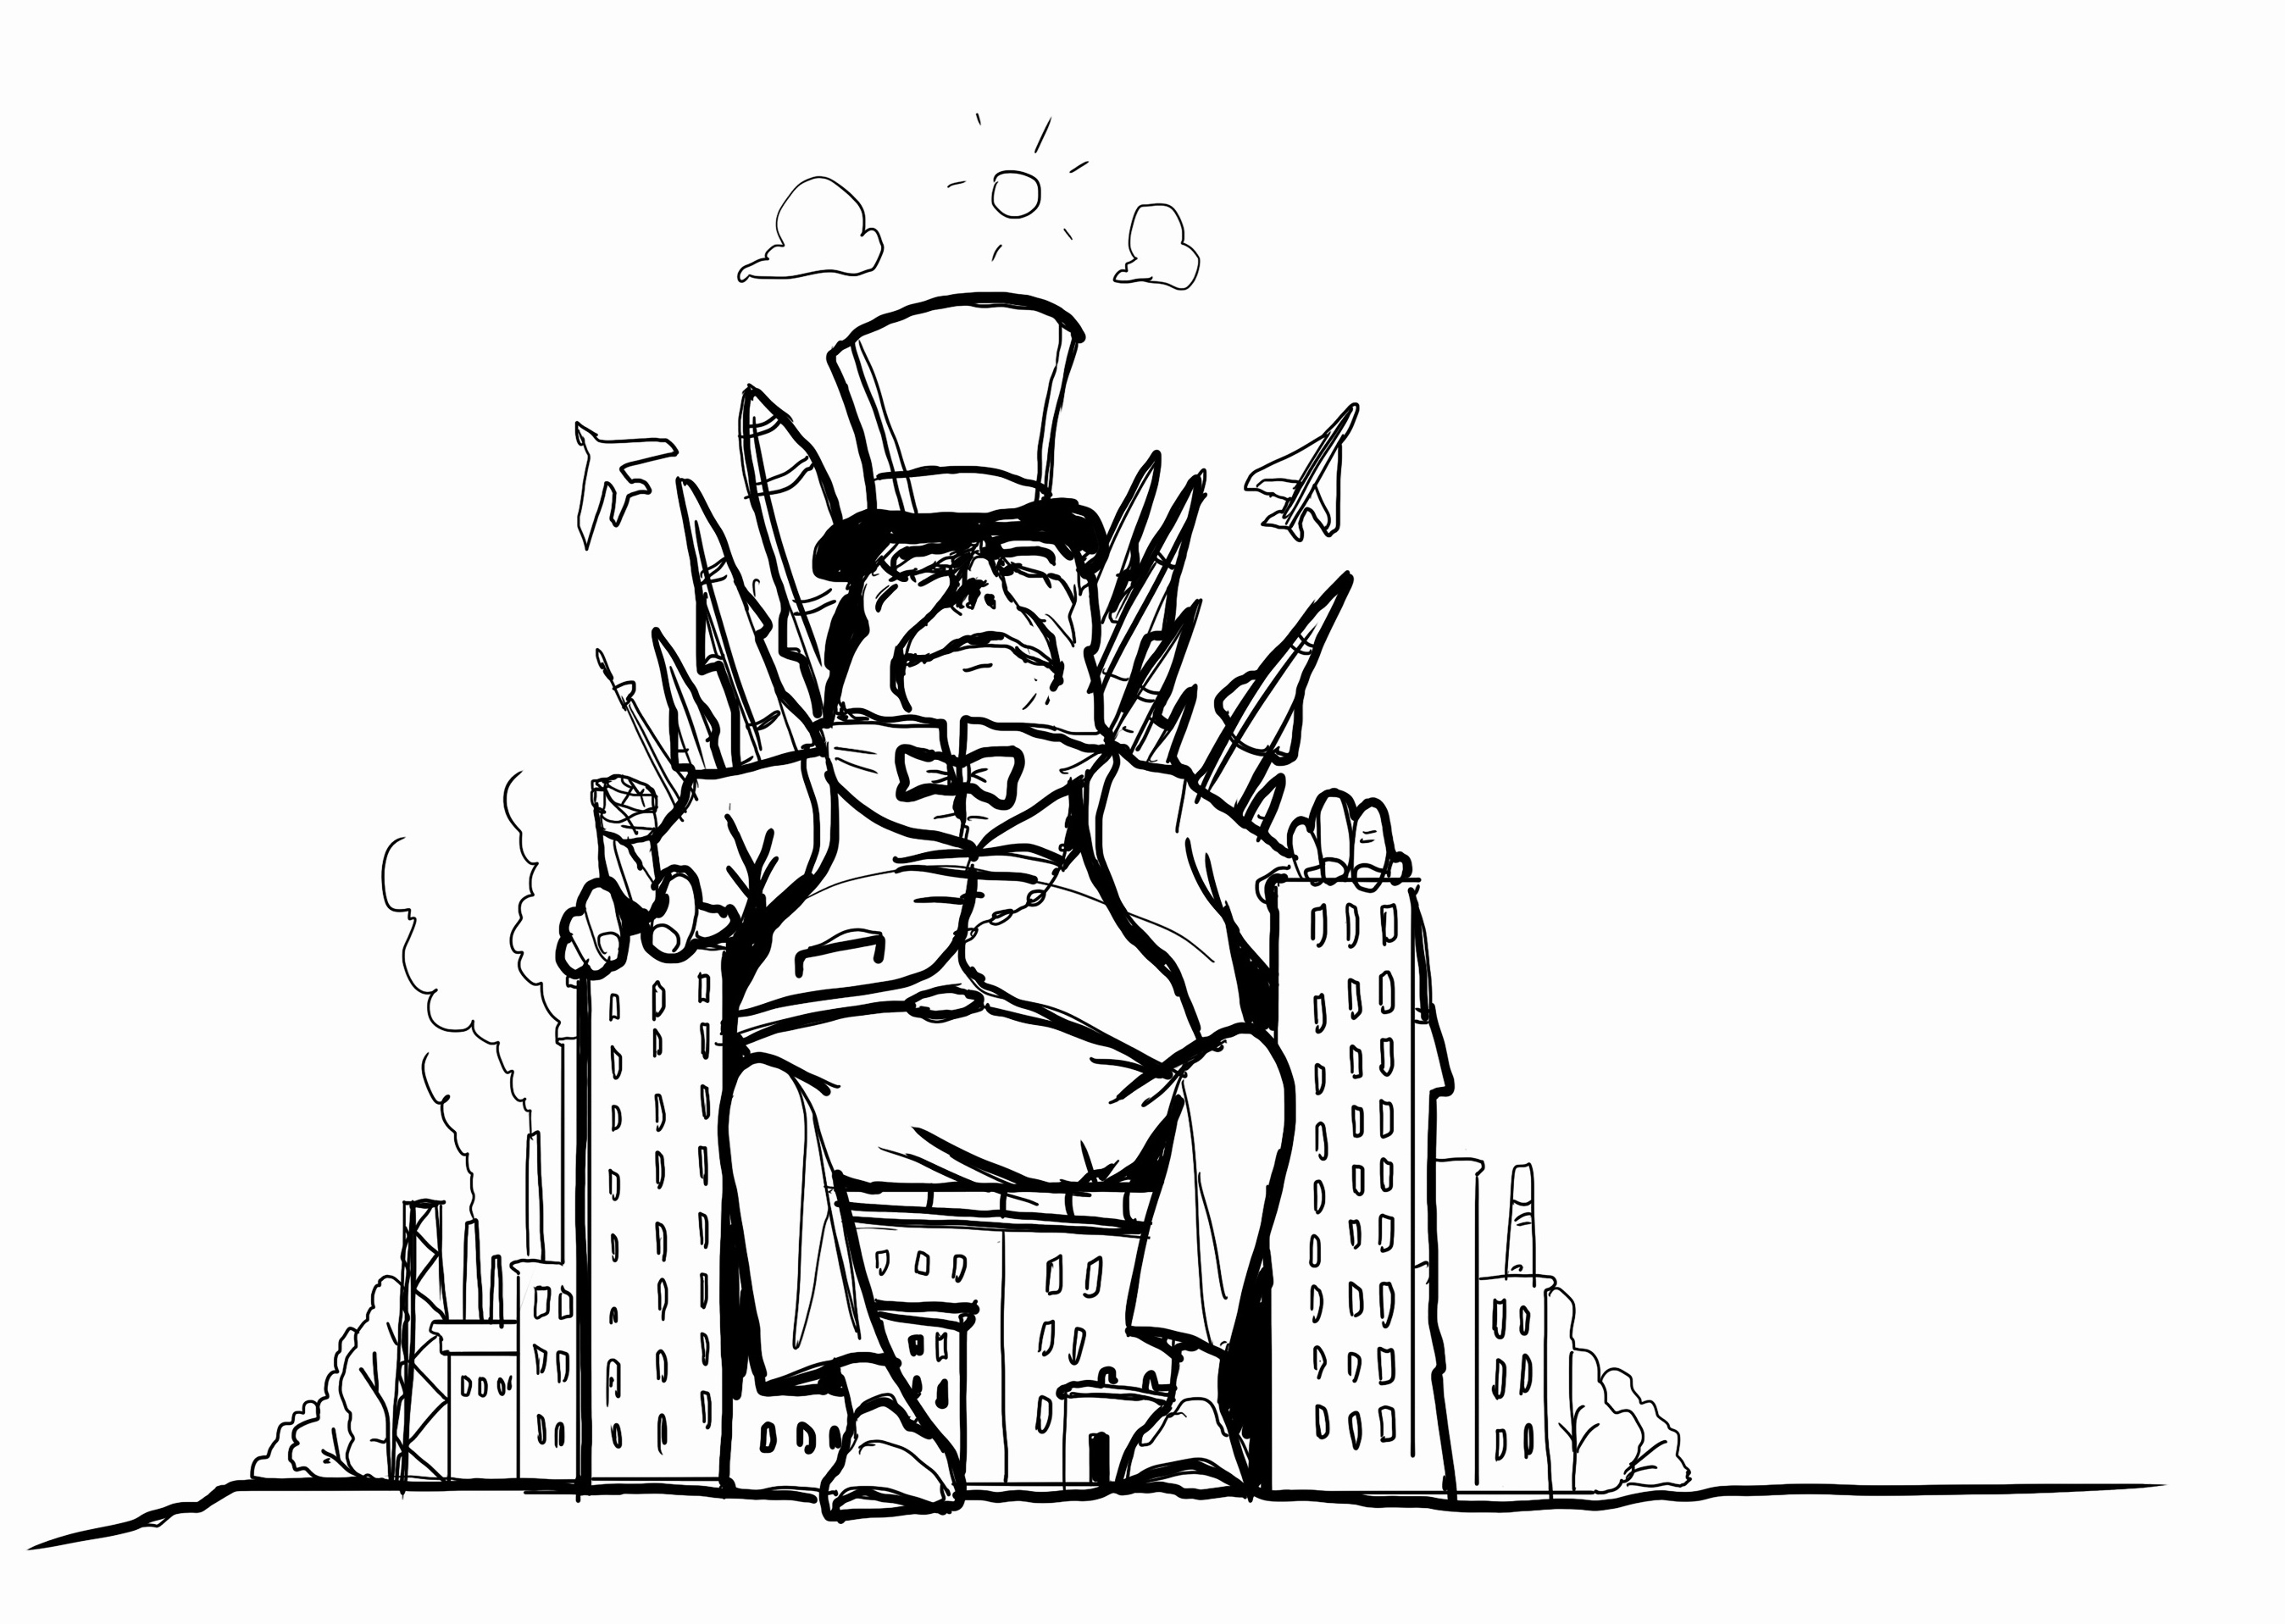 Fat Corporation Man sitting on a cityscape